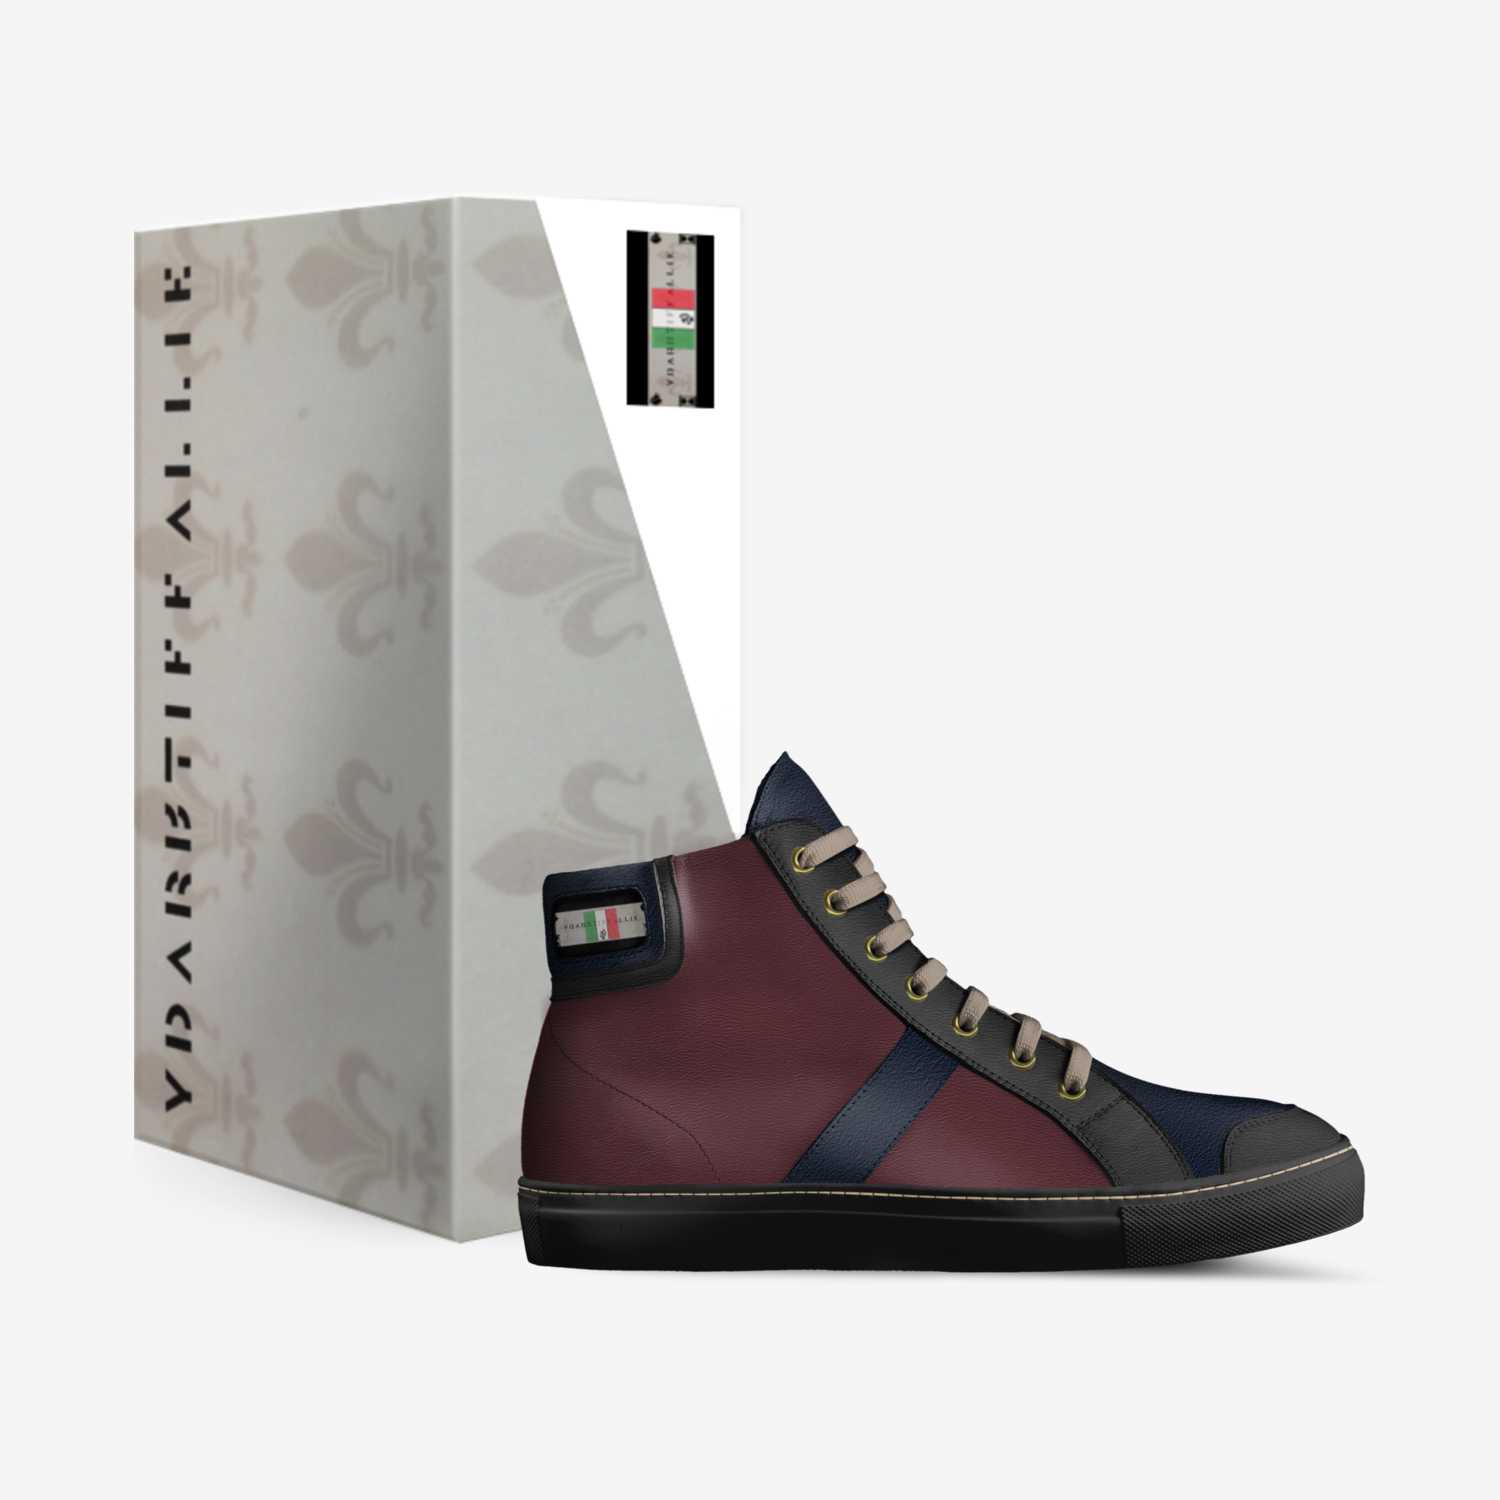 YDARB&TIFFALLIE custom made in Italy shoes by Ydarb Tiffallie | Box view